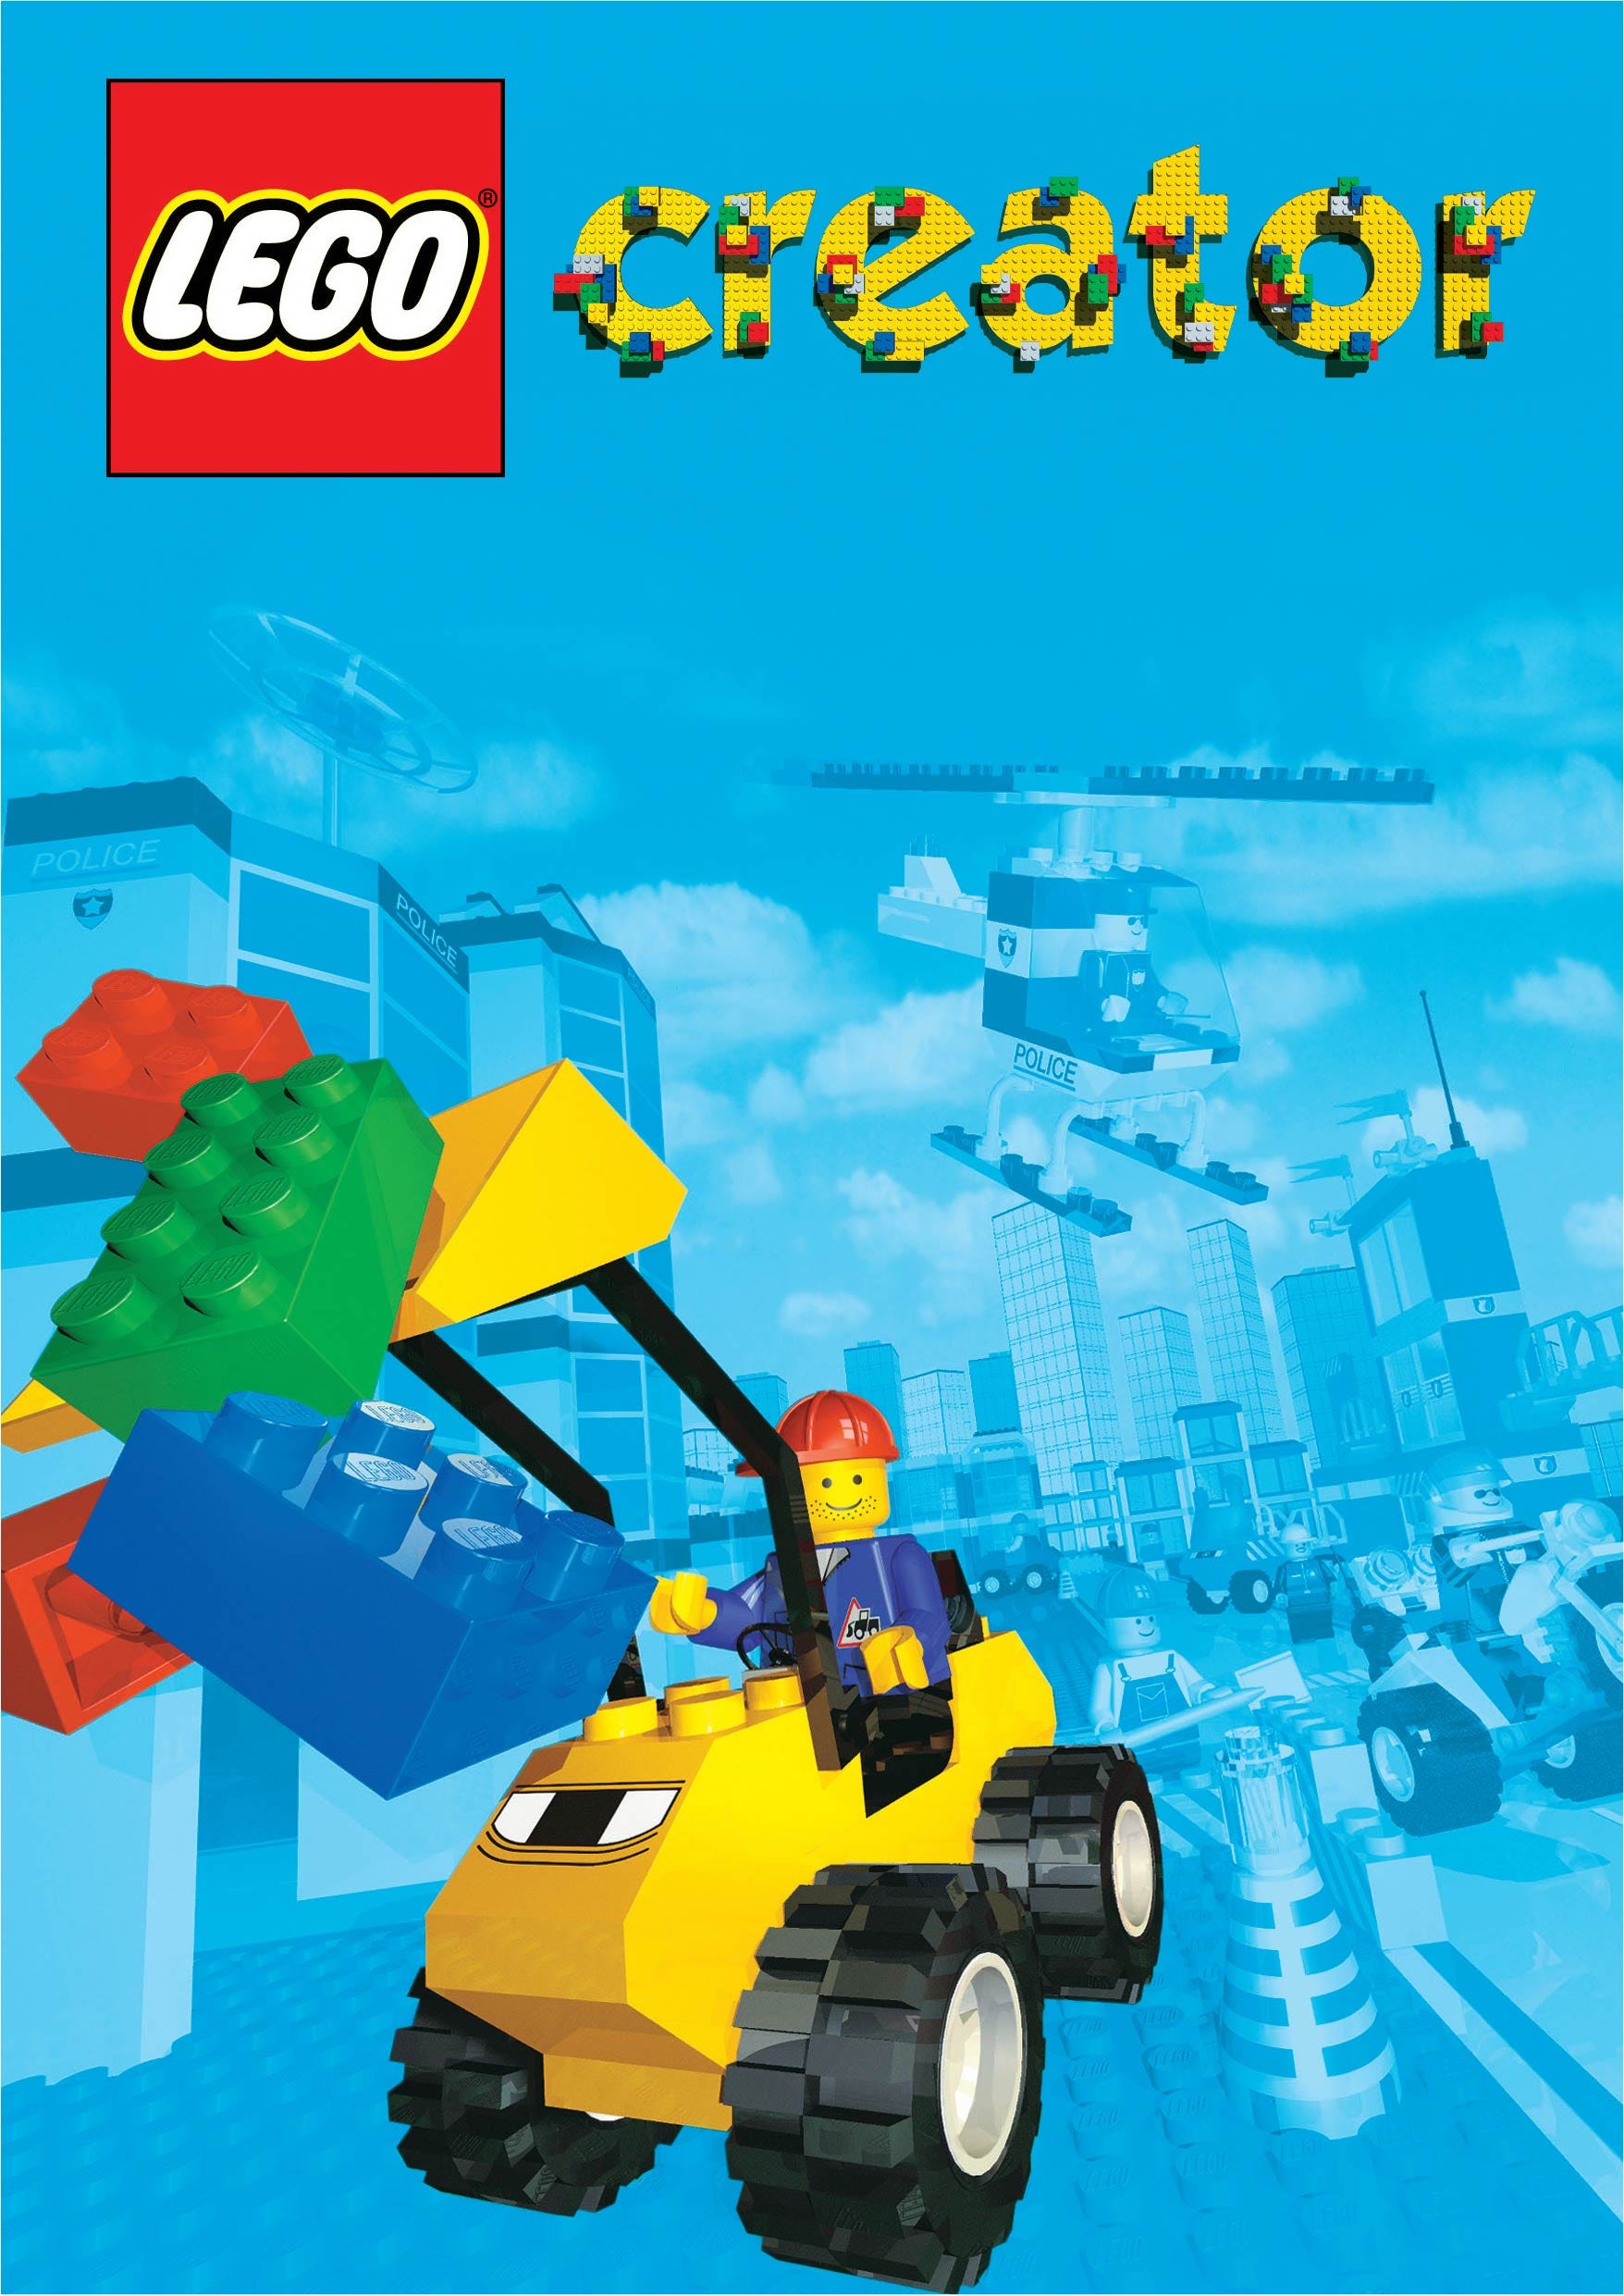 Lego Creator + Knights' Kingdom + Harry Potter | by Cory Roberts |  Shinkansen Retrogamer | Medium